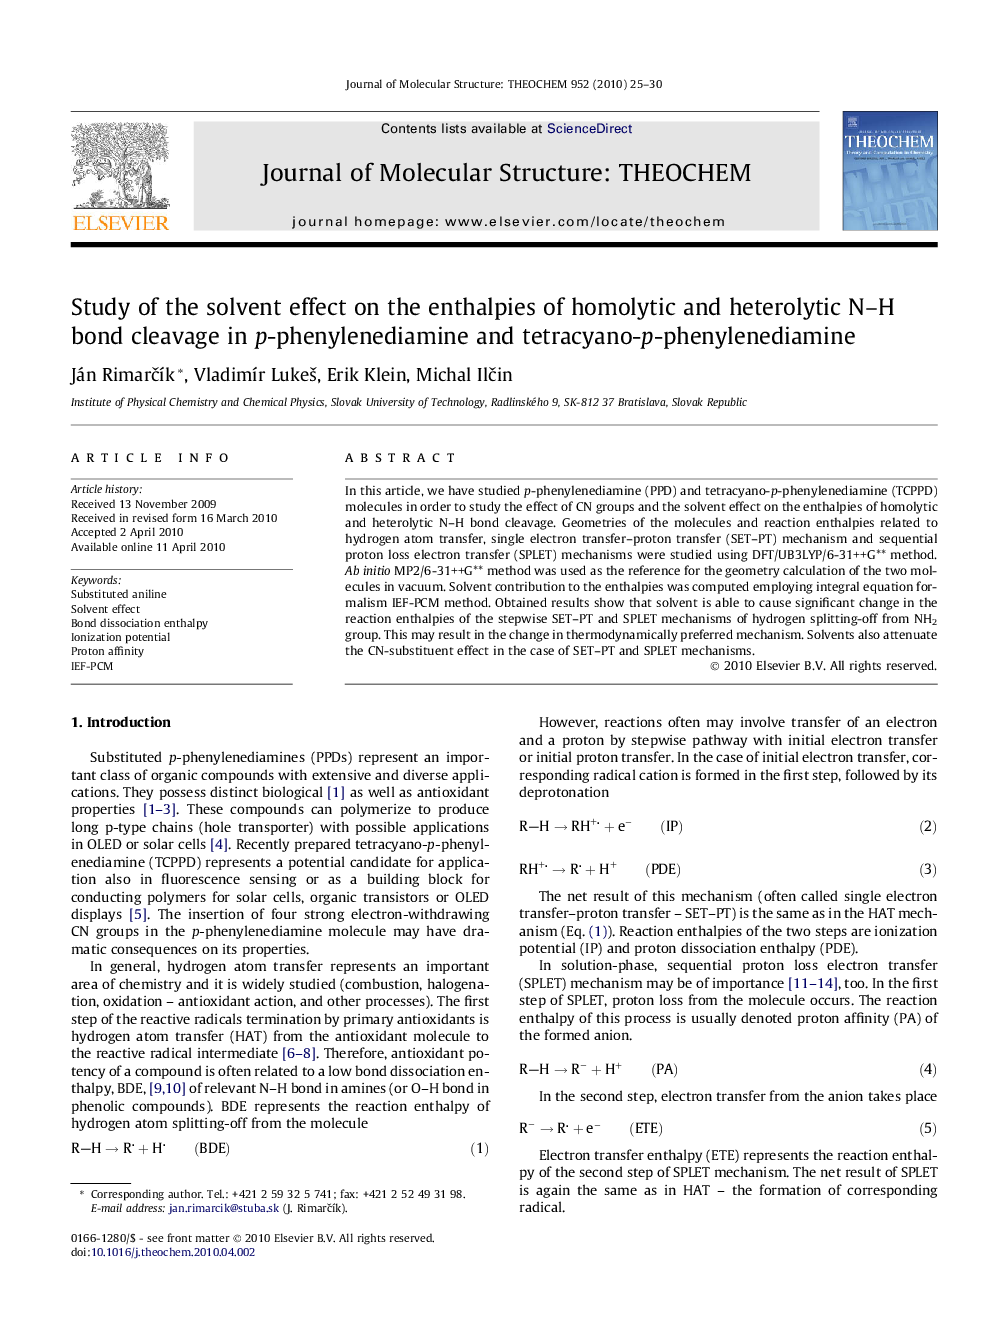 Study of the solvent effect on the enthalpies of homolytic and heterolytic N-H bond cleavage in p-phenylenediamine and tetracyano-p-phenylenediamine